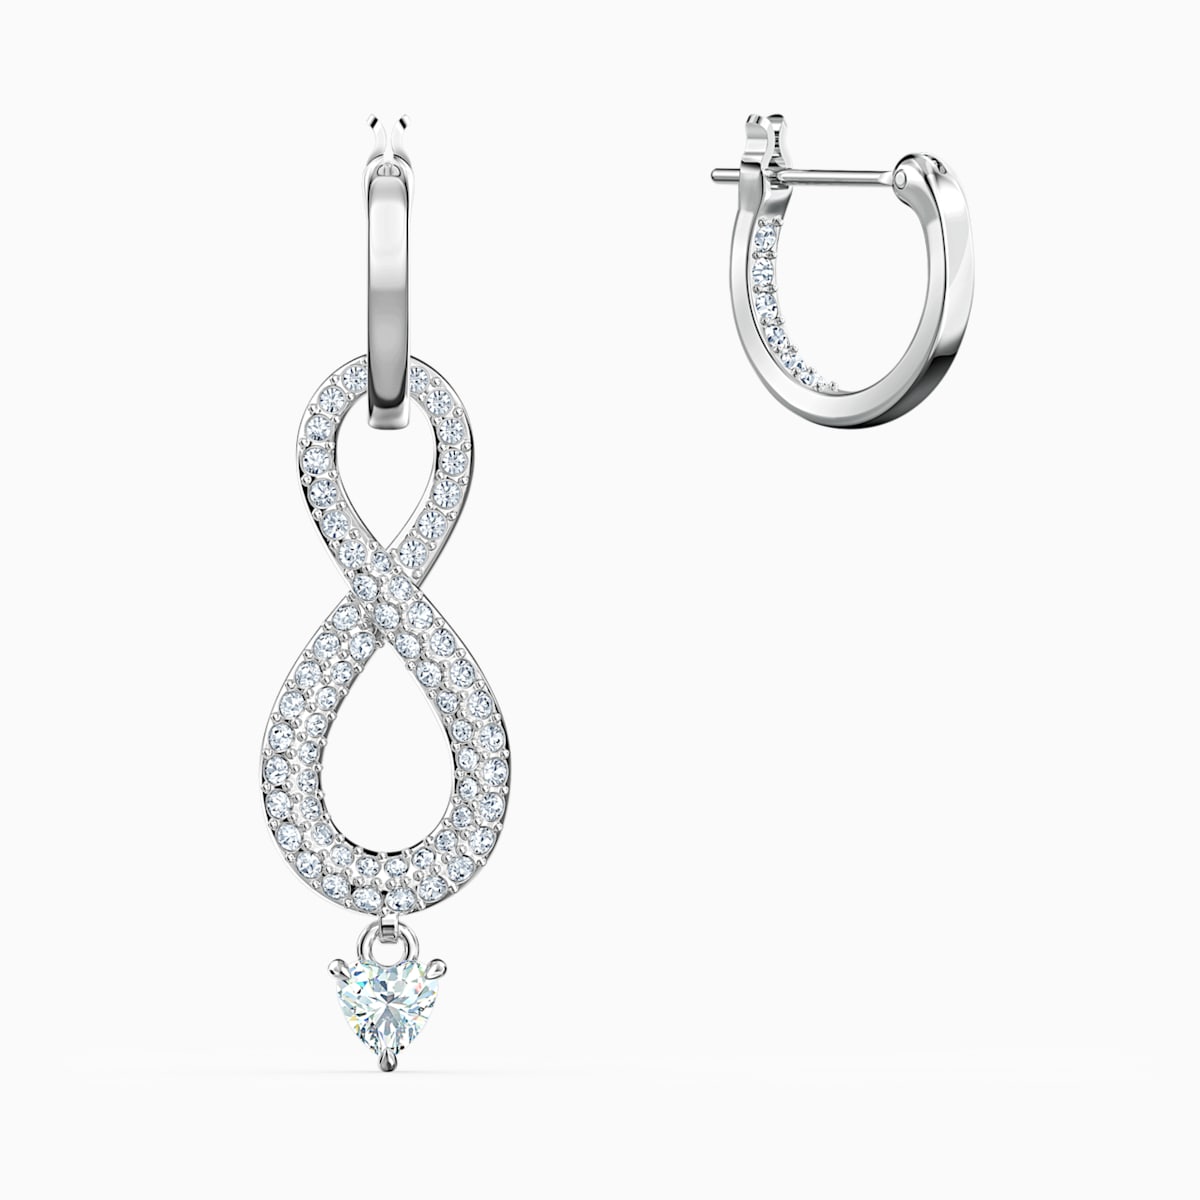 Swarovski Infinity Pierced Earrings, White, Rhodium plated - Swarovski, 5520578